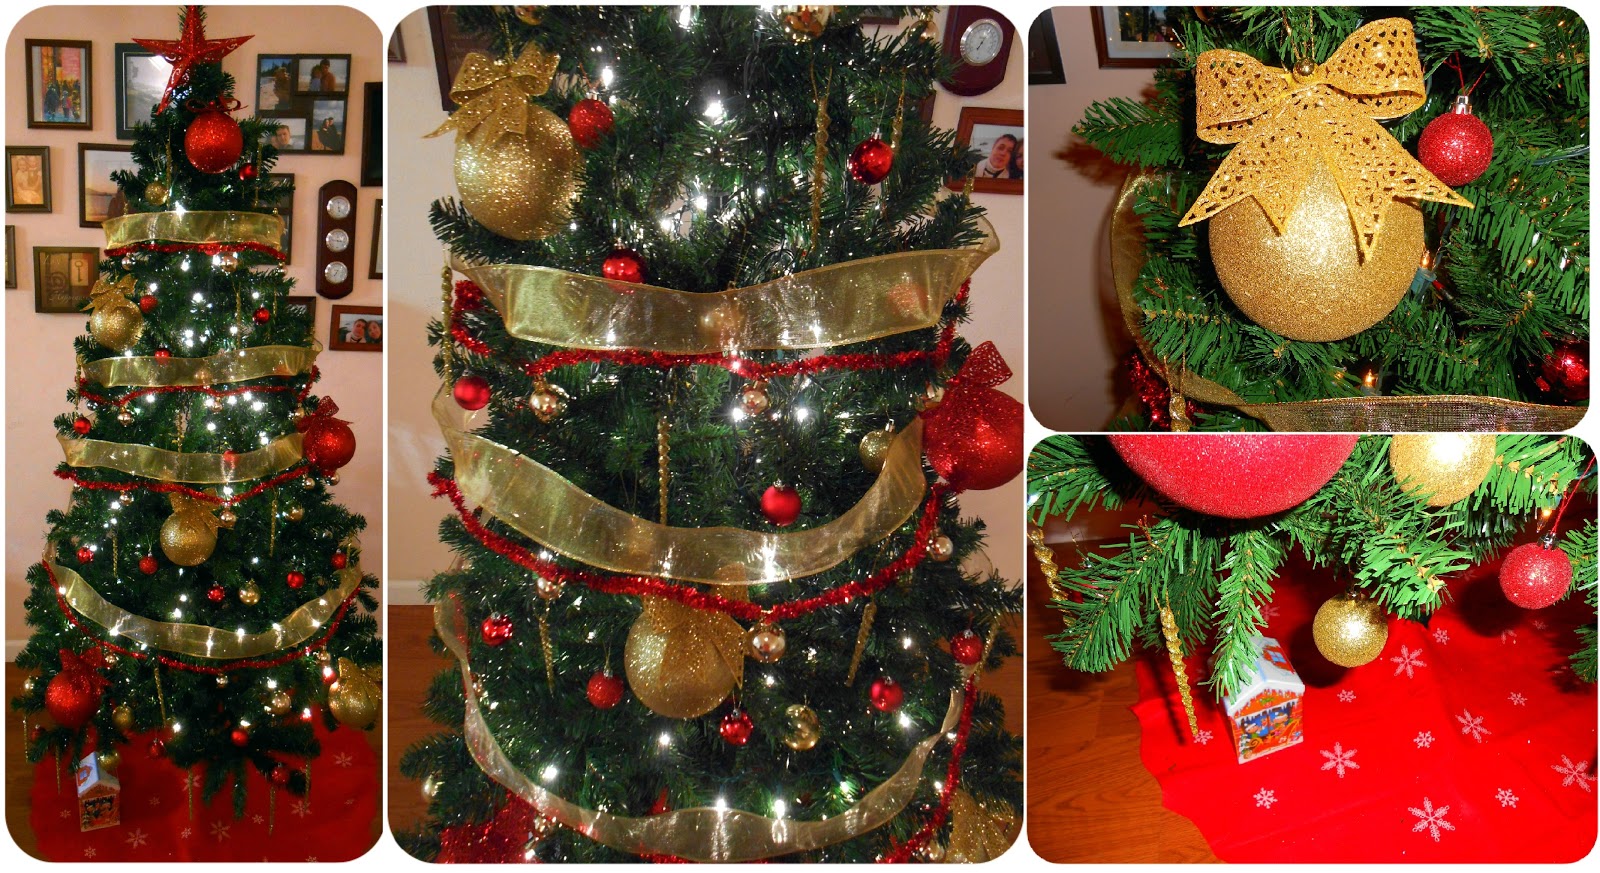 ... Tree, Plus Christmas Mantel and Other Dollar Tree Christmas Decor